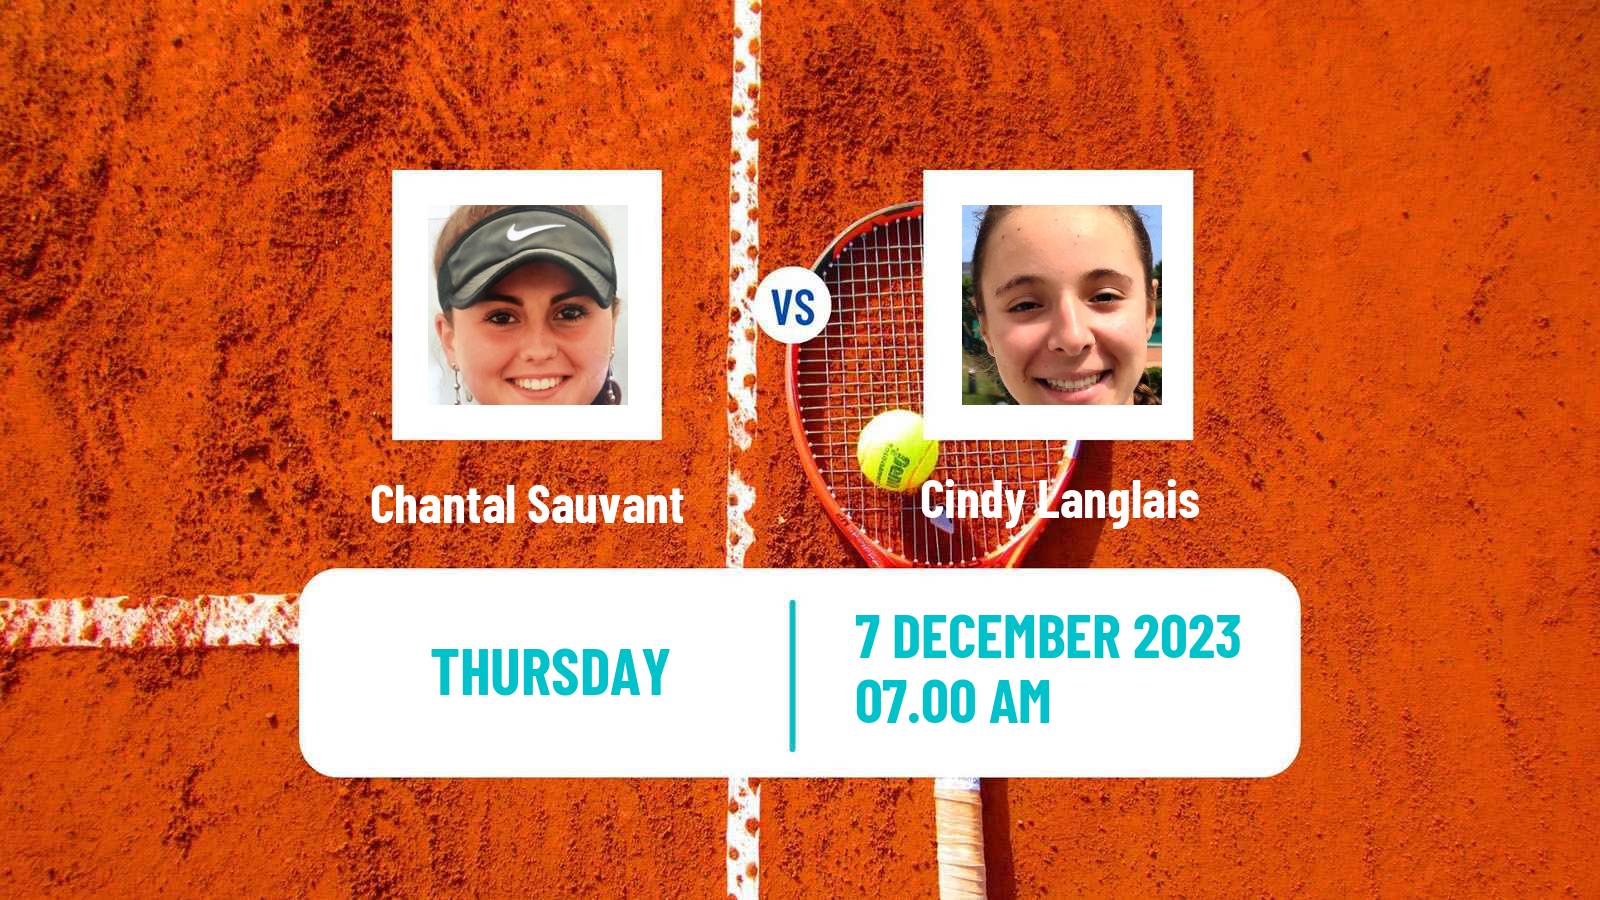 Tennis ITF W15 Valencia 2 Women Chantal Sauvant - Cindy Langlais